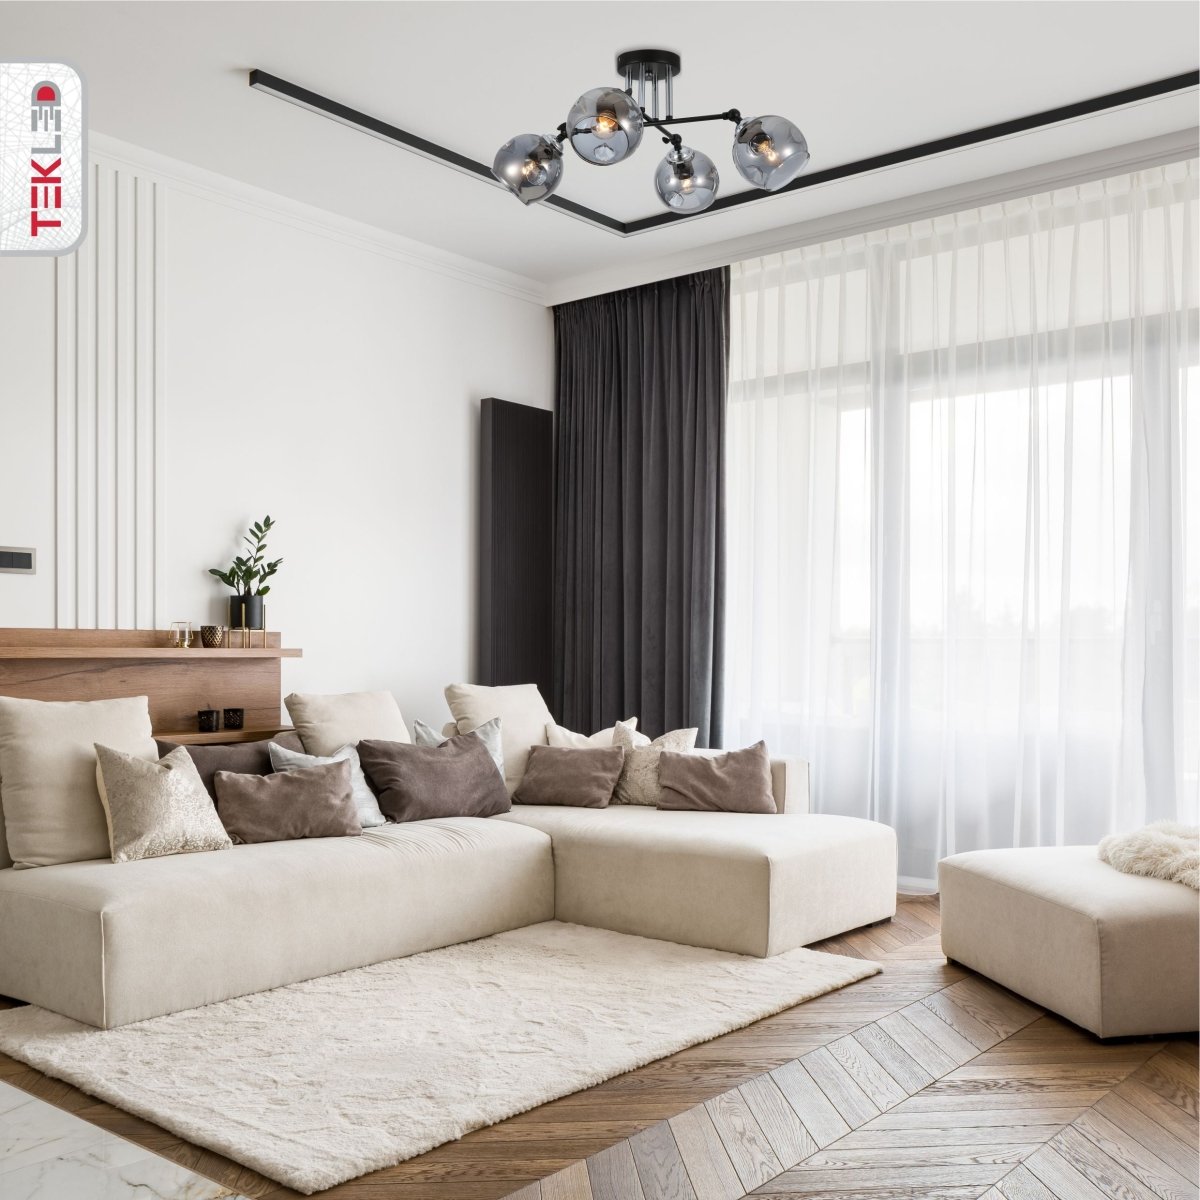 Smoky Glass Black And Chrome Semi Flush Ceiling Light 4Xe27 in indoor setting living room